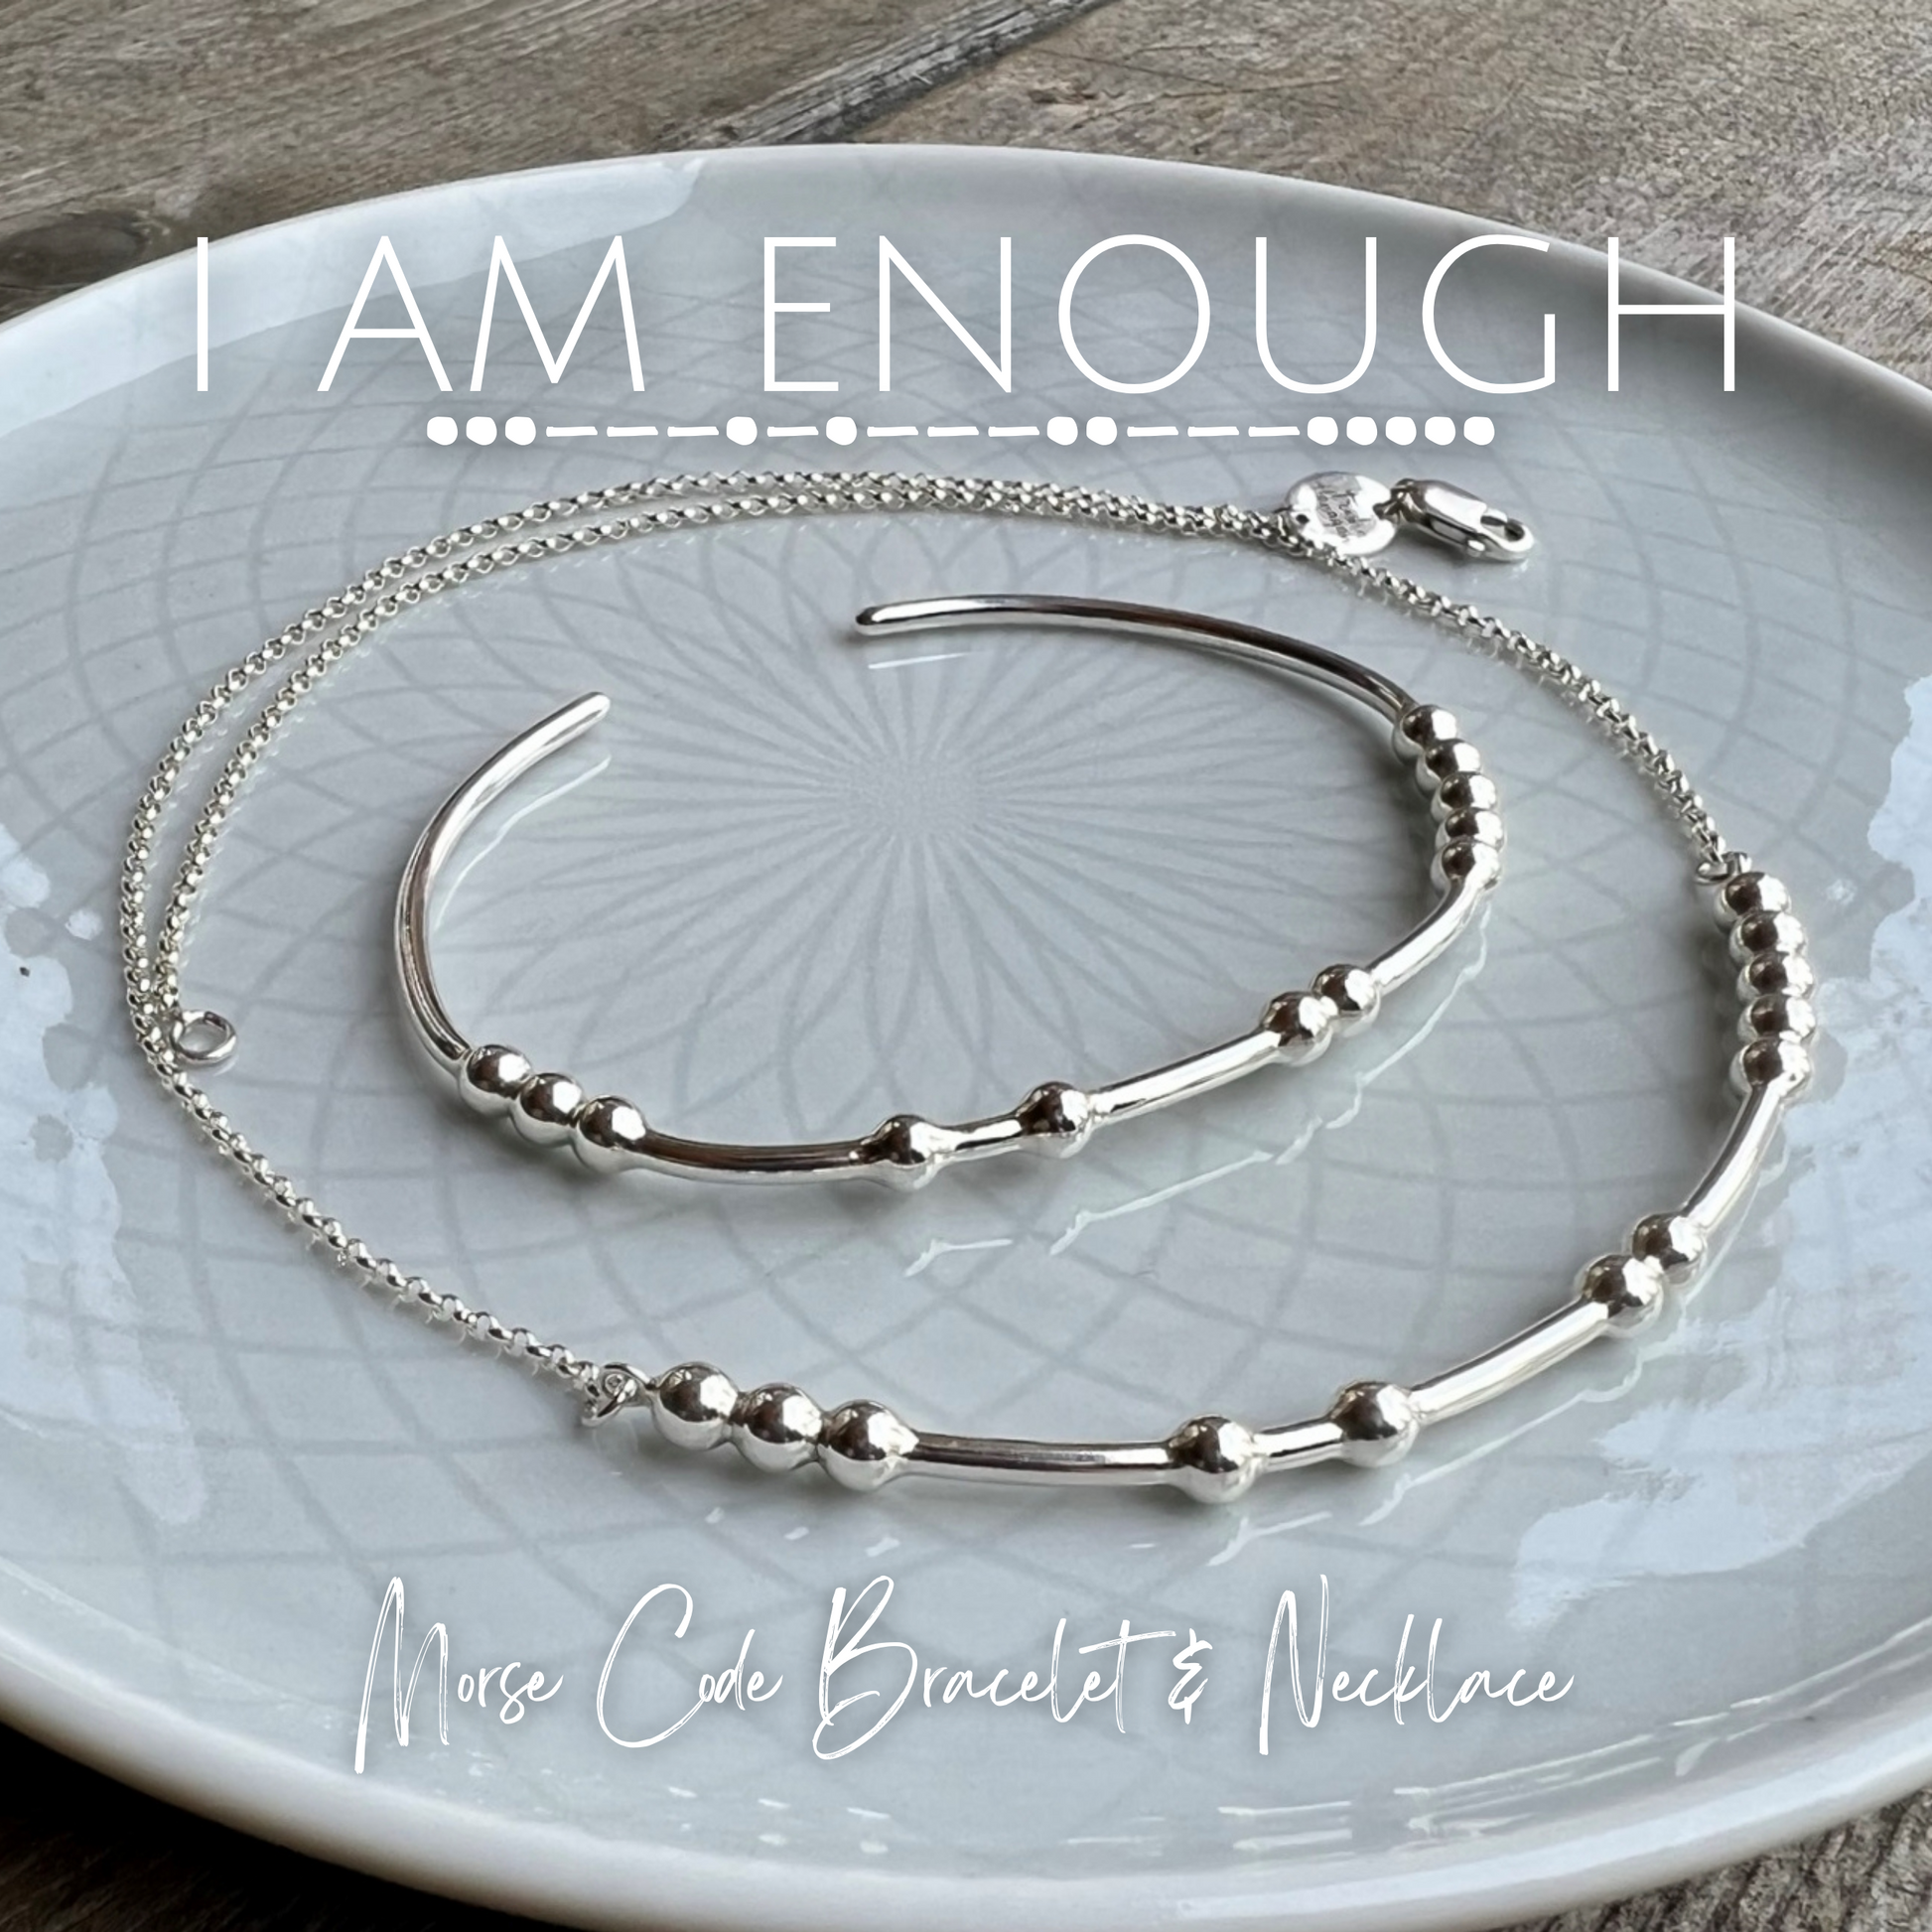 I AM ENOUGH Morse Code Bracelet and Necklace - Trisha Flanagan